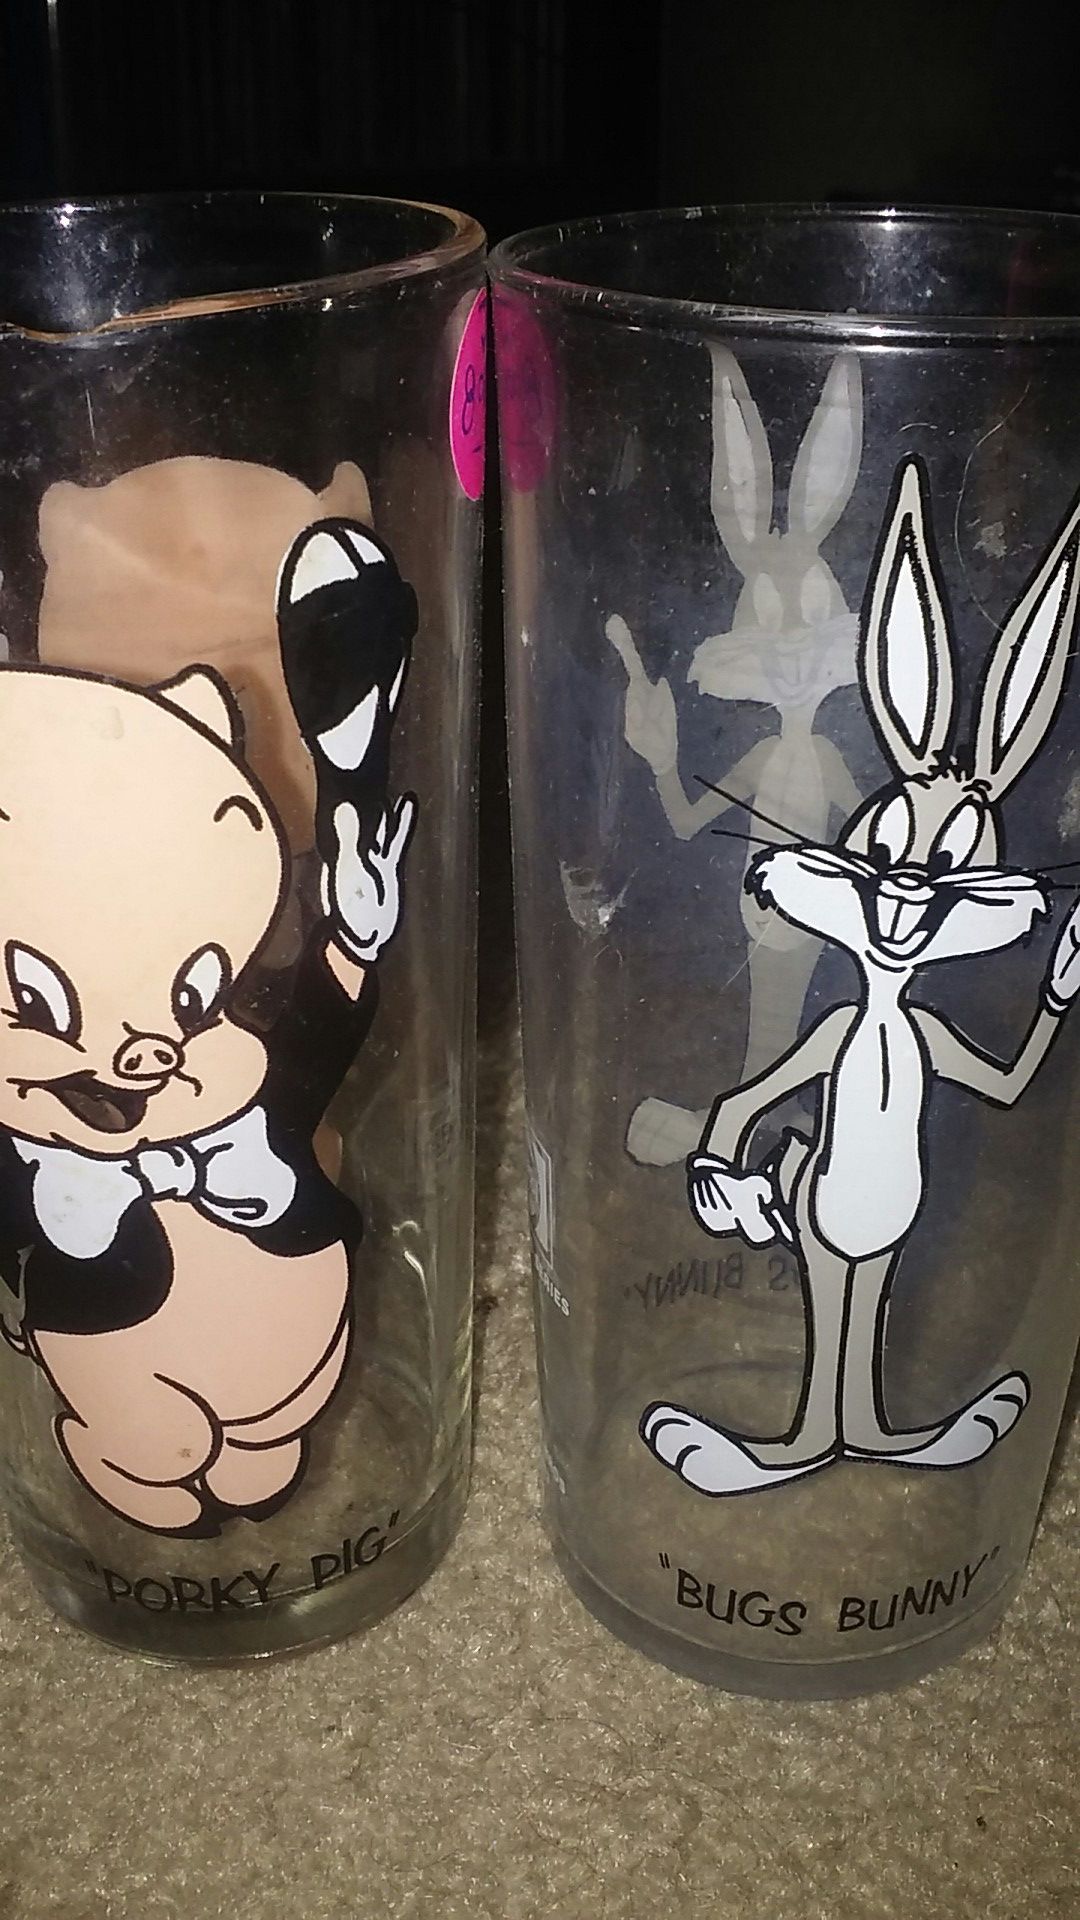 Bugs Bunny & Porky Pig Pepsi 1973 Collectible Glasses